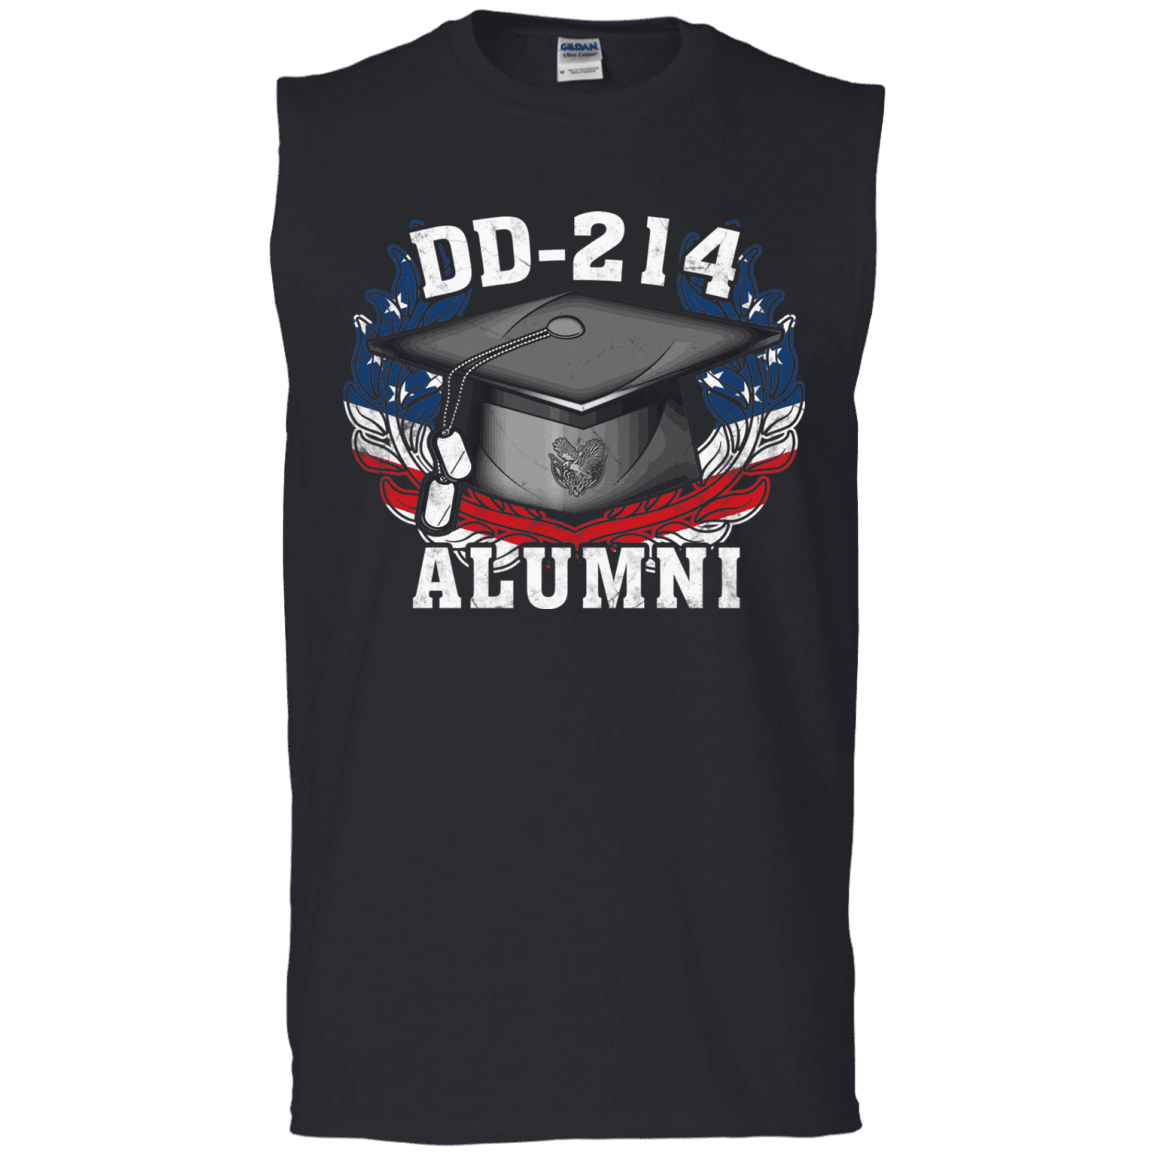 Military T-Shirt "DD 214 Alumni Veteran" Front-TShirt-General-Veterans Nation